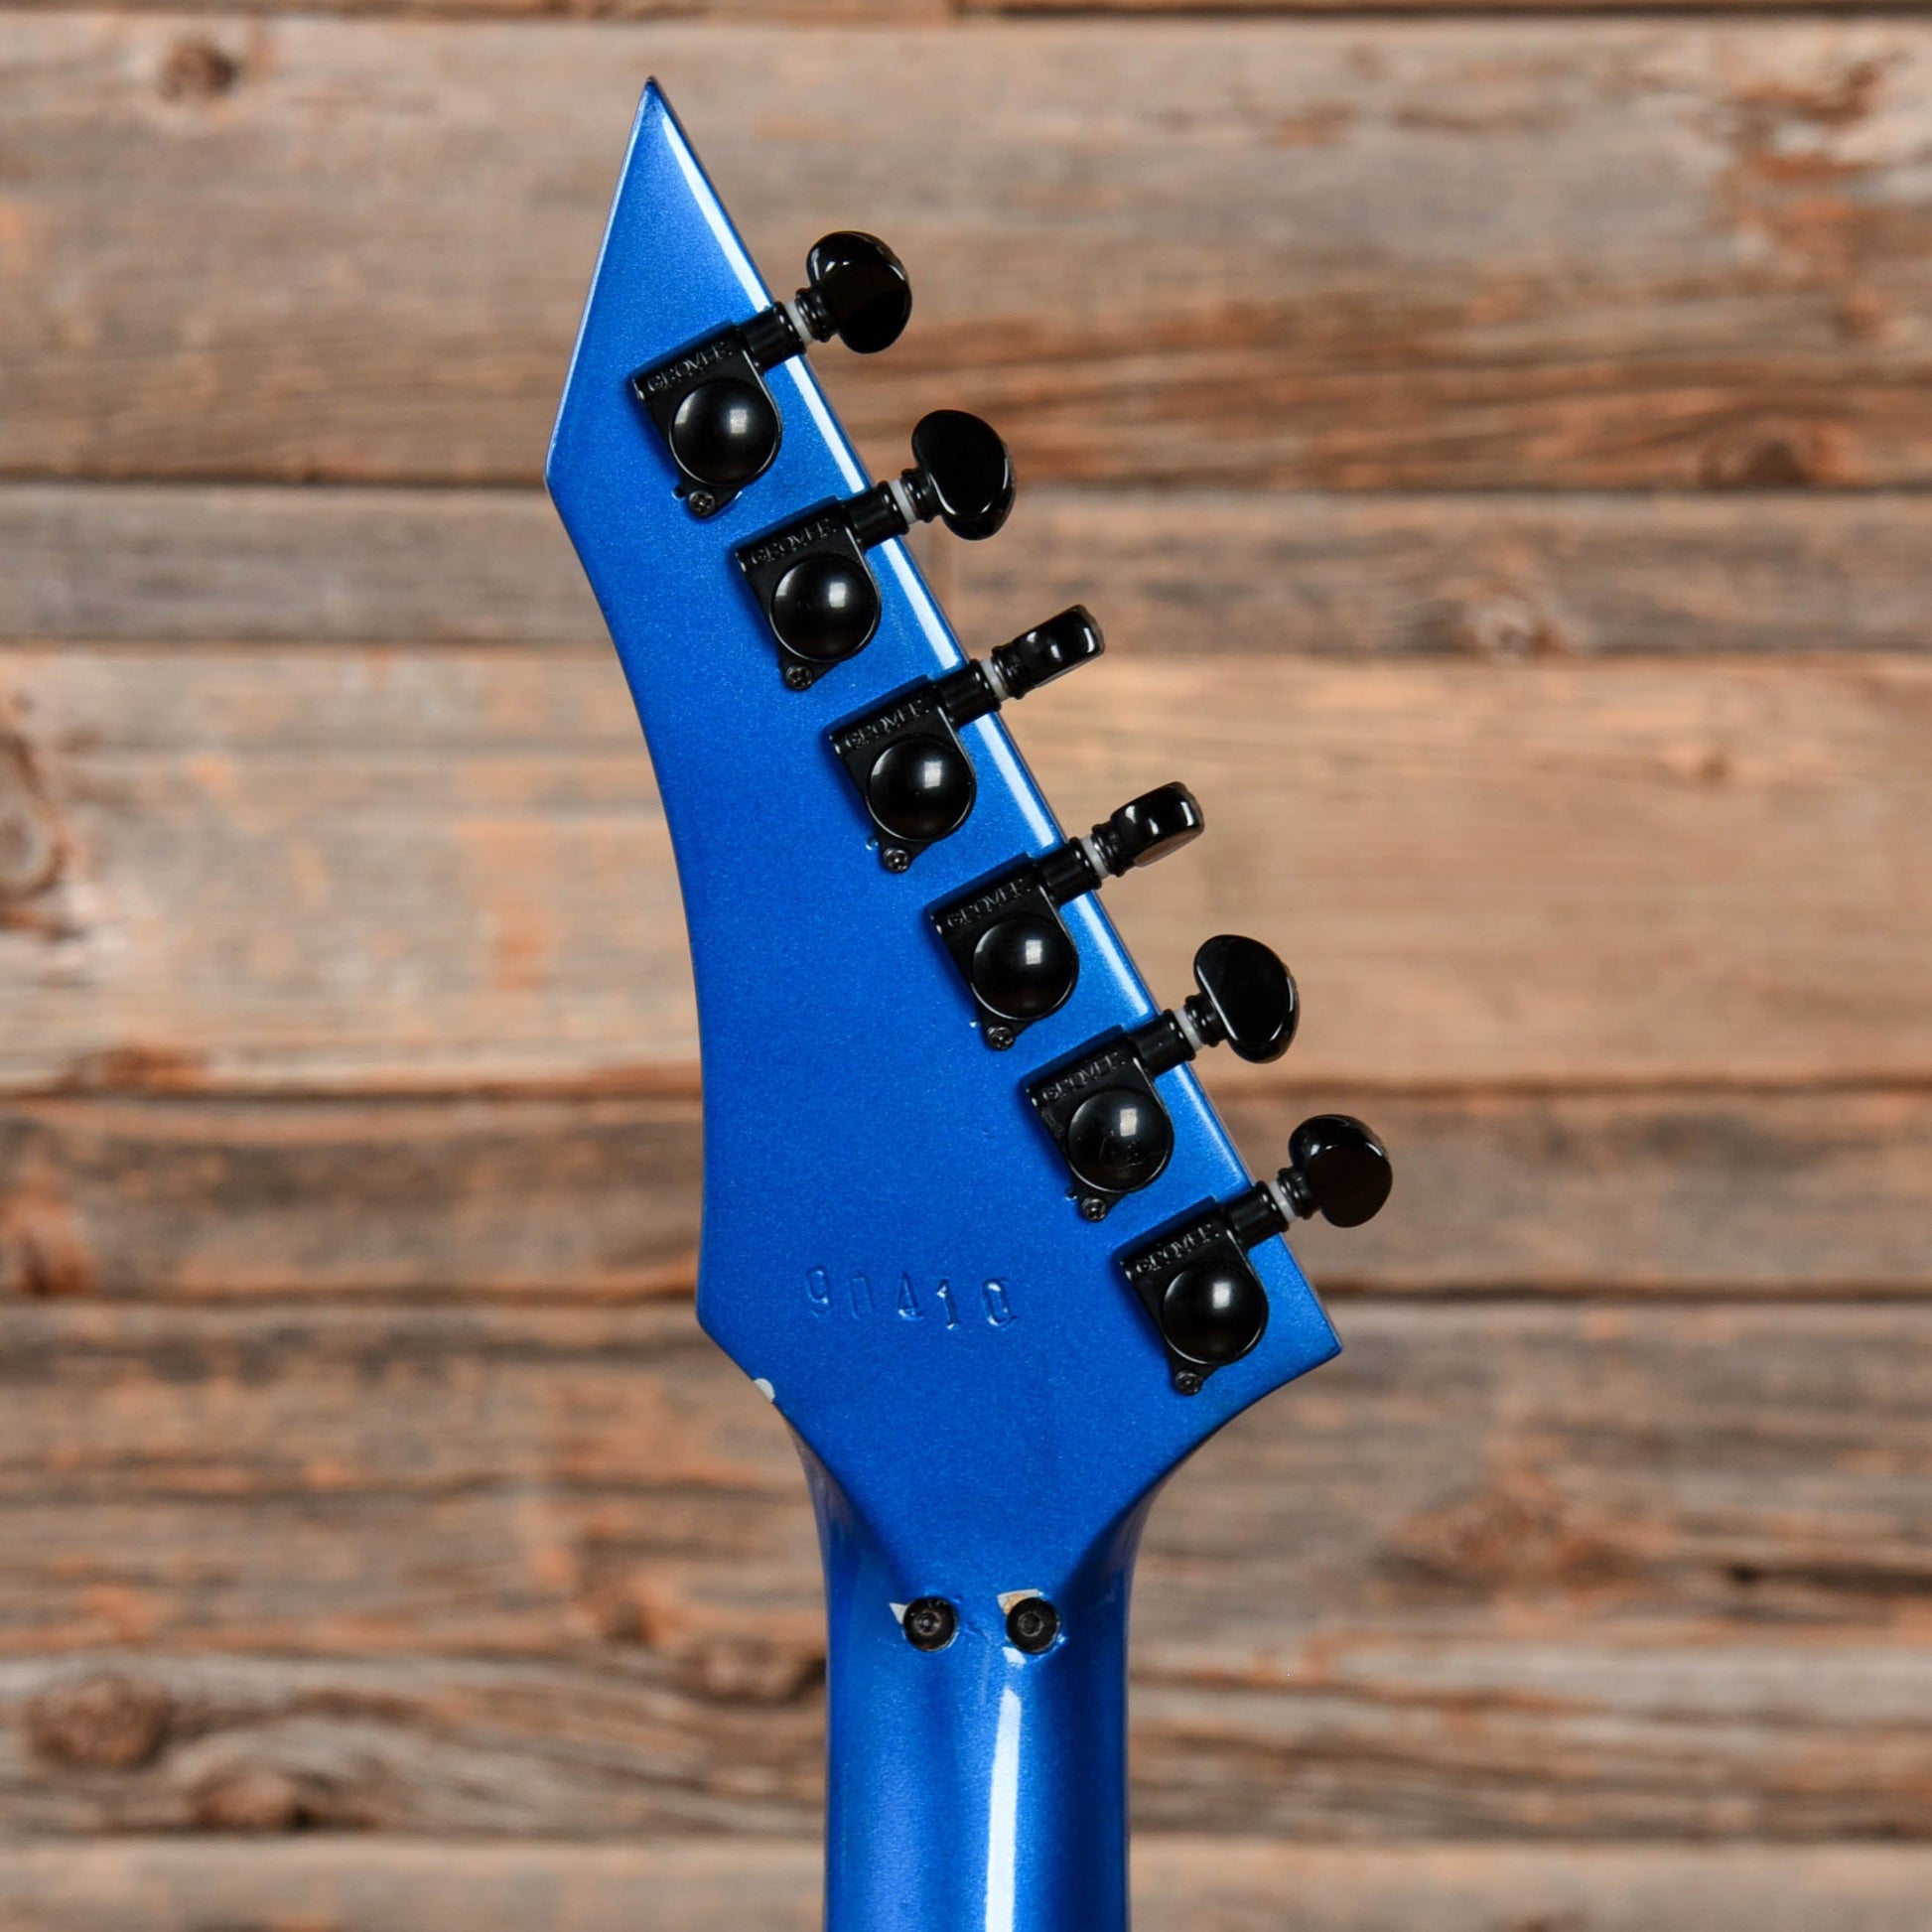 B.C. Rich ST-III Metallic Blue 1990 Electric Guitars / Solid Body